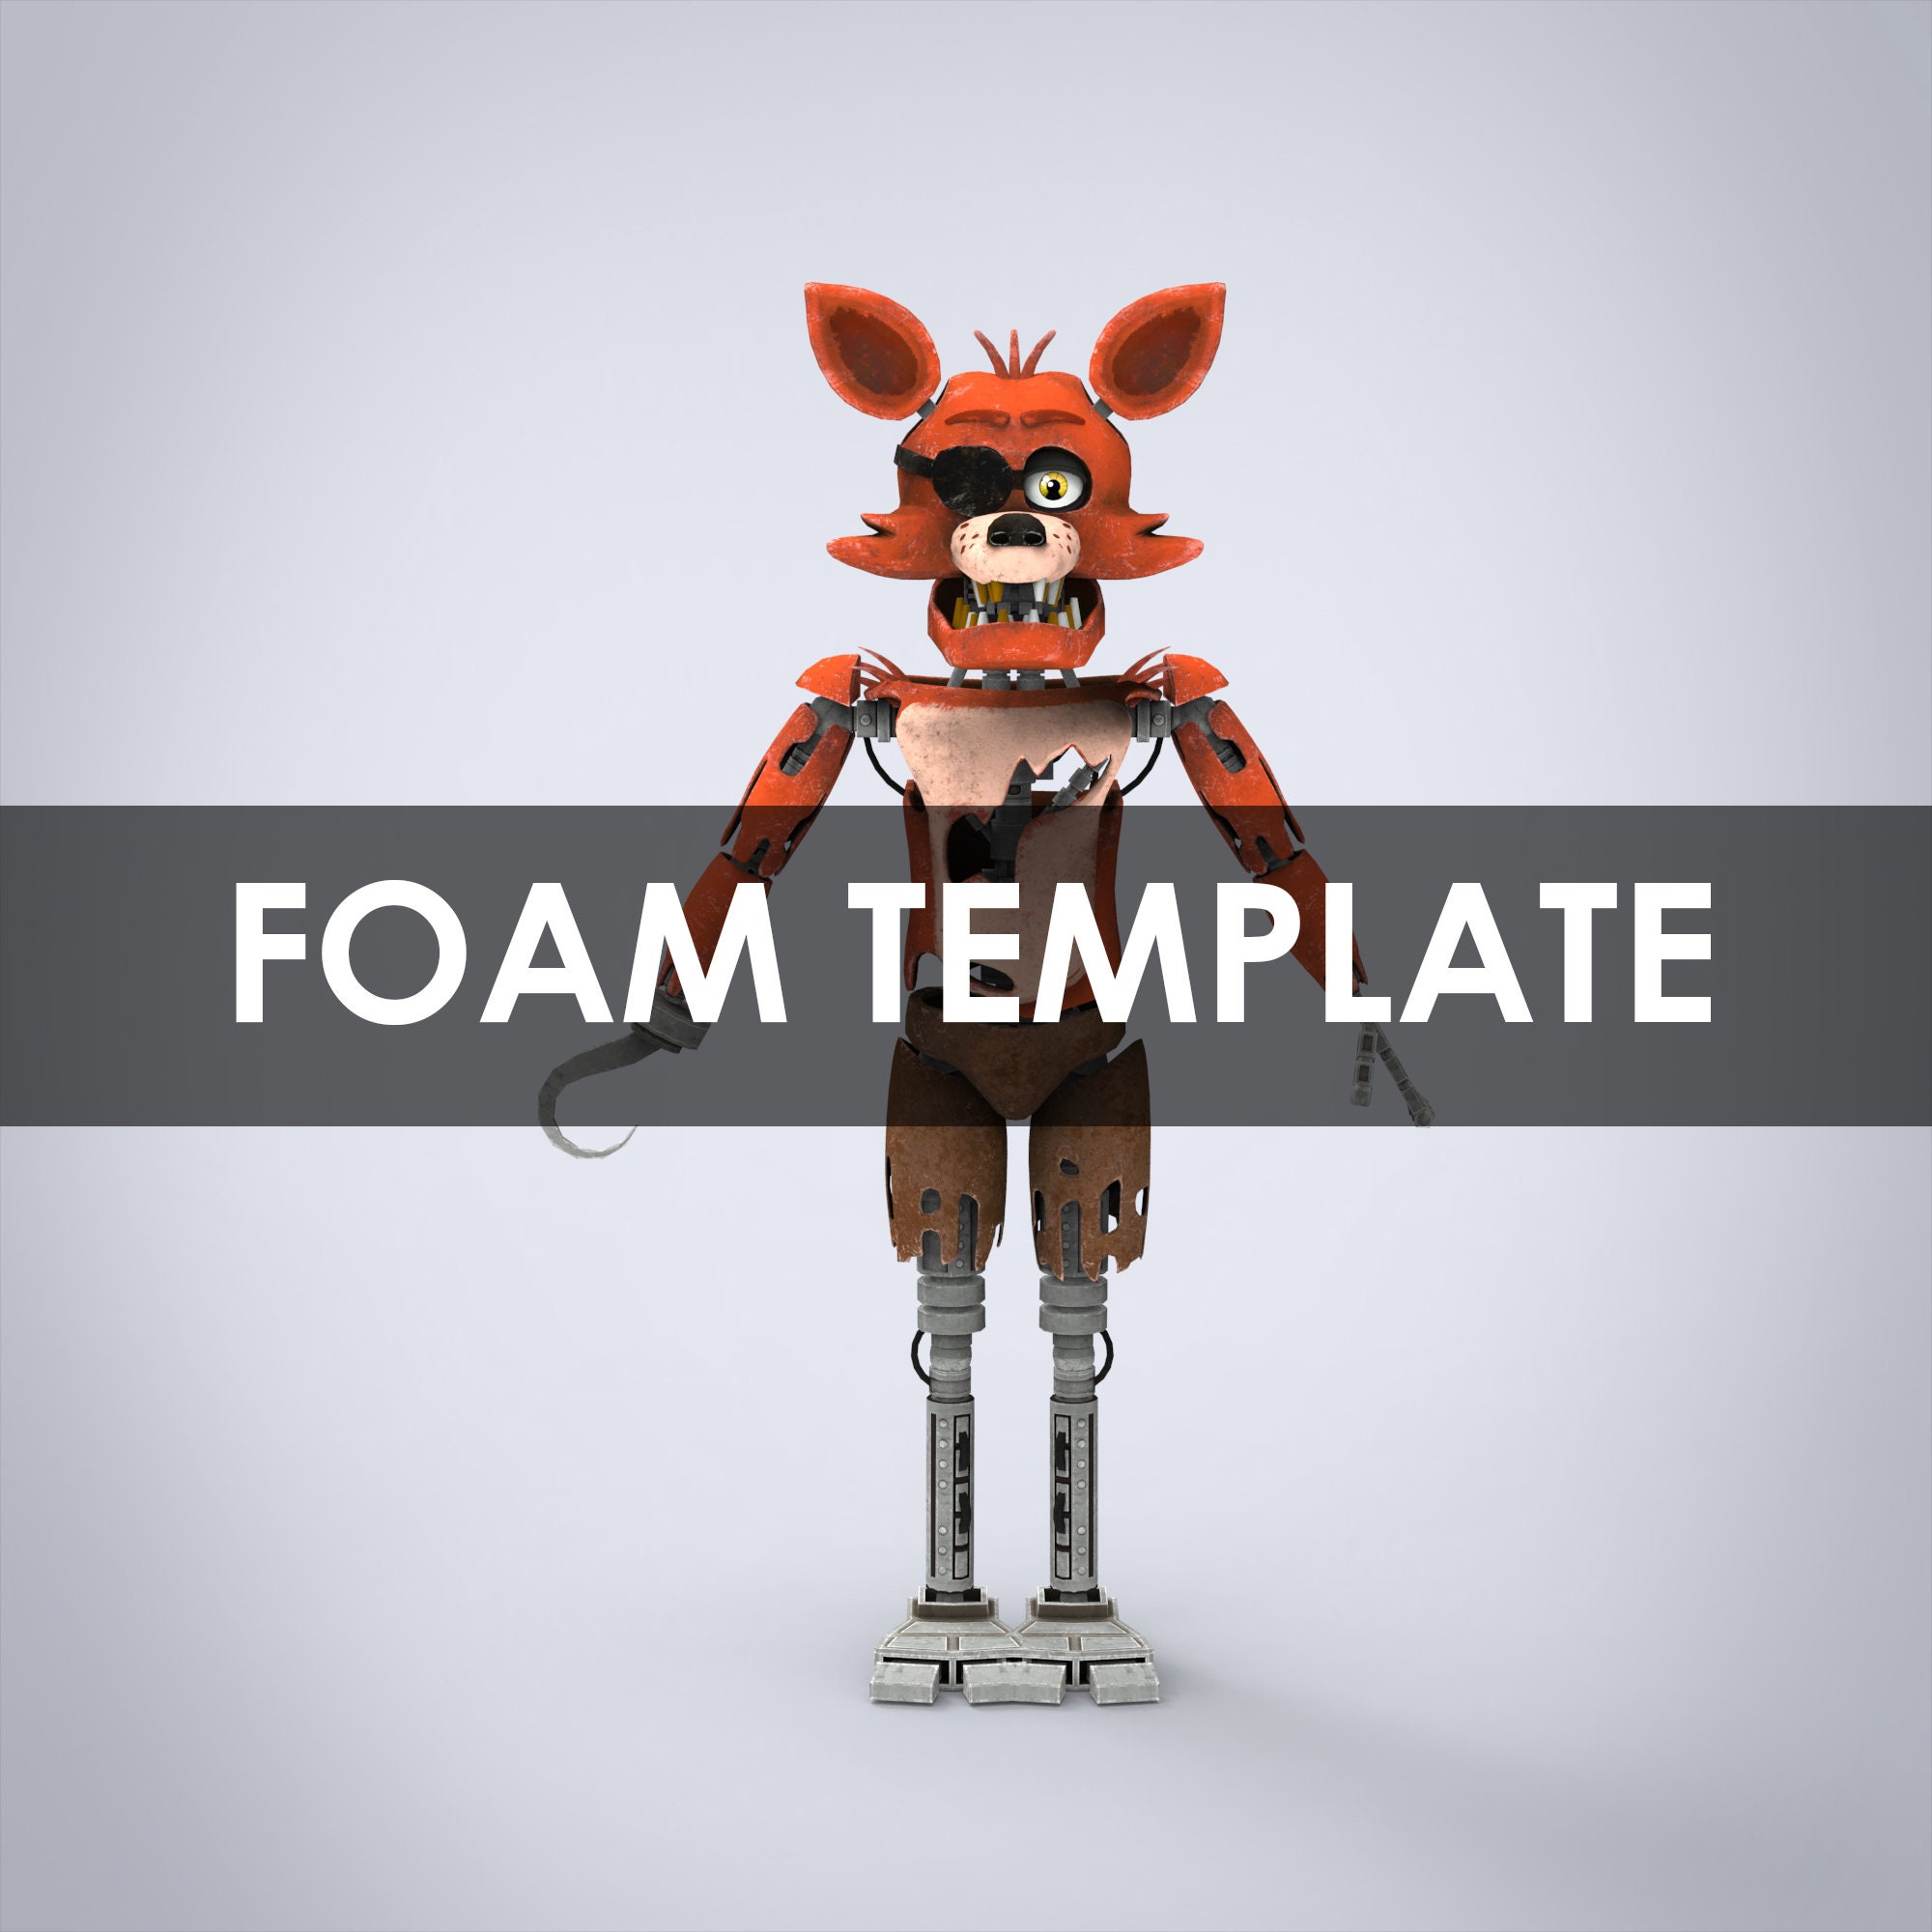 Nightmare Foxy Cosplay Mask&Costume - FNAF : r/fivenightsatfreddys